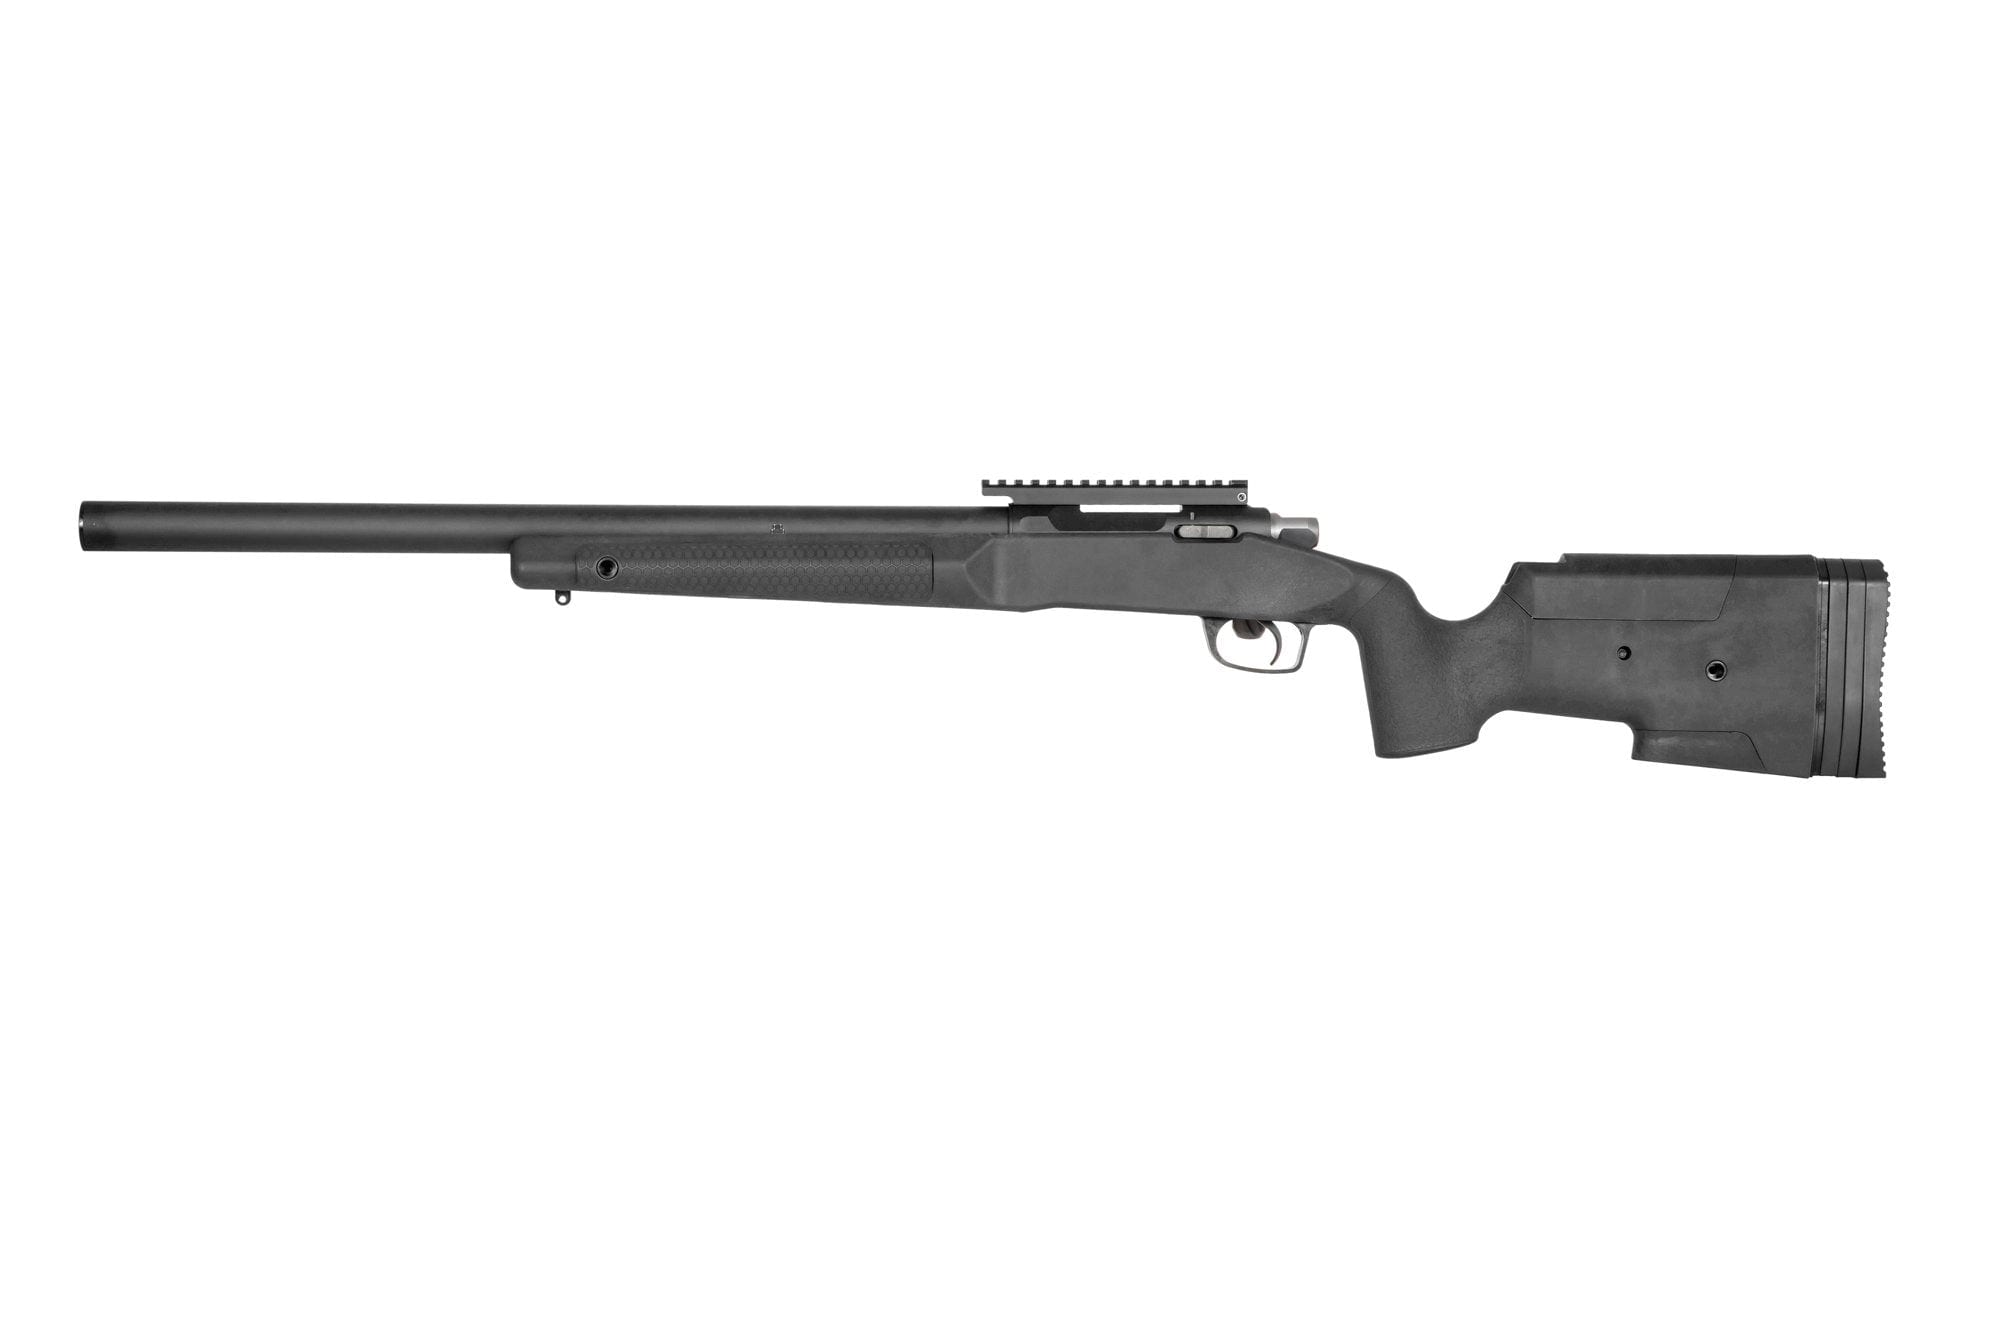 Maple Leaf MLC 338 Sniper Rifle Replica - Black